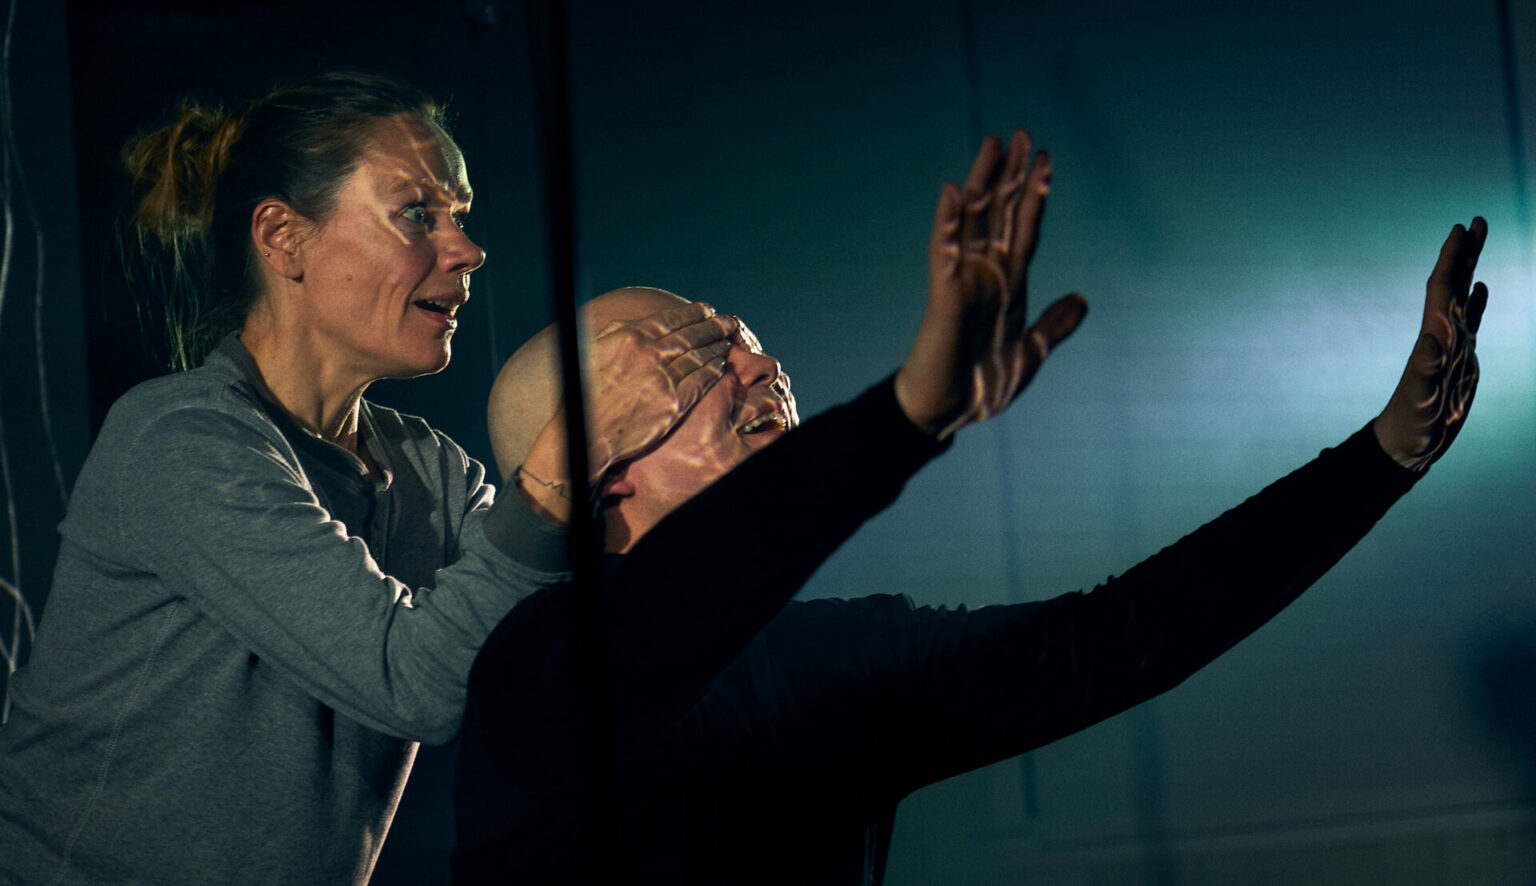 The performance “Castle of Joy” - part of IETM Aarhus 2023 at the dance theater Bora Bora